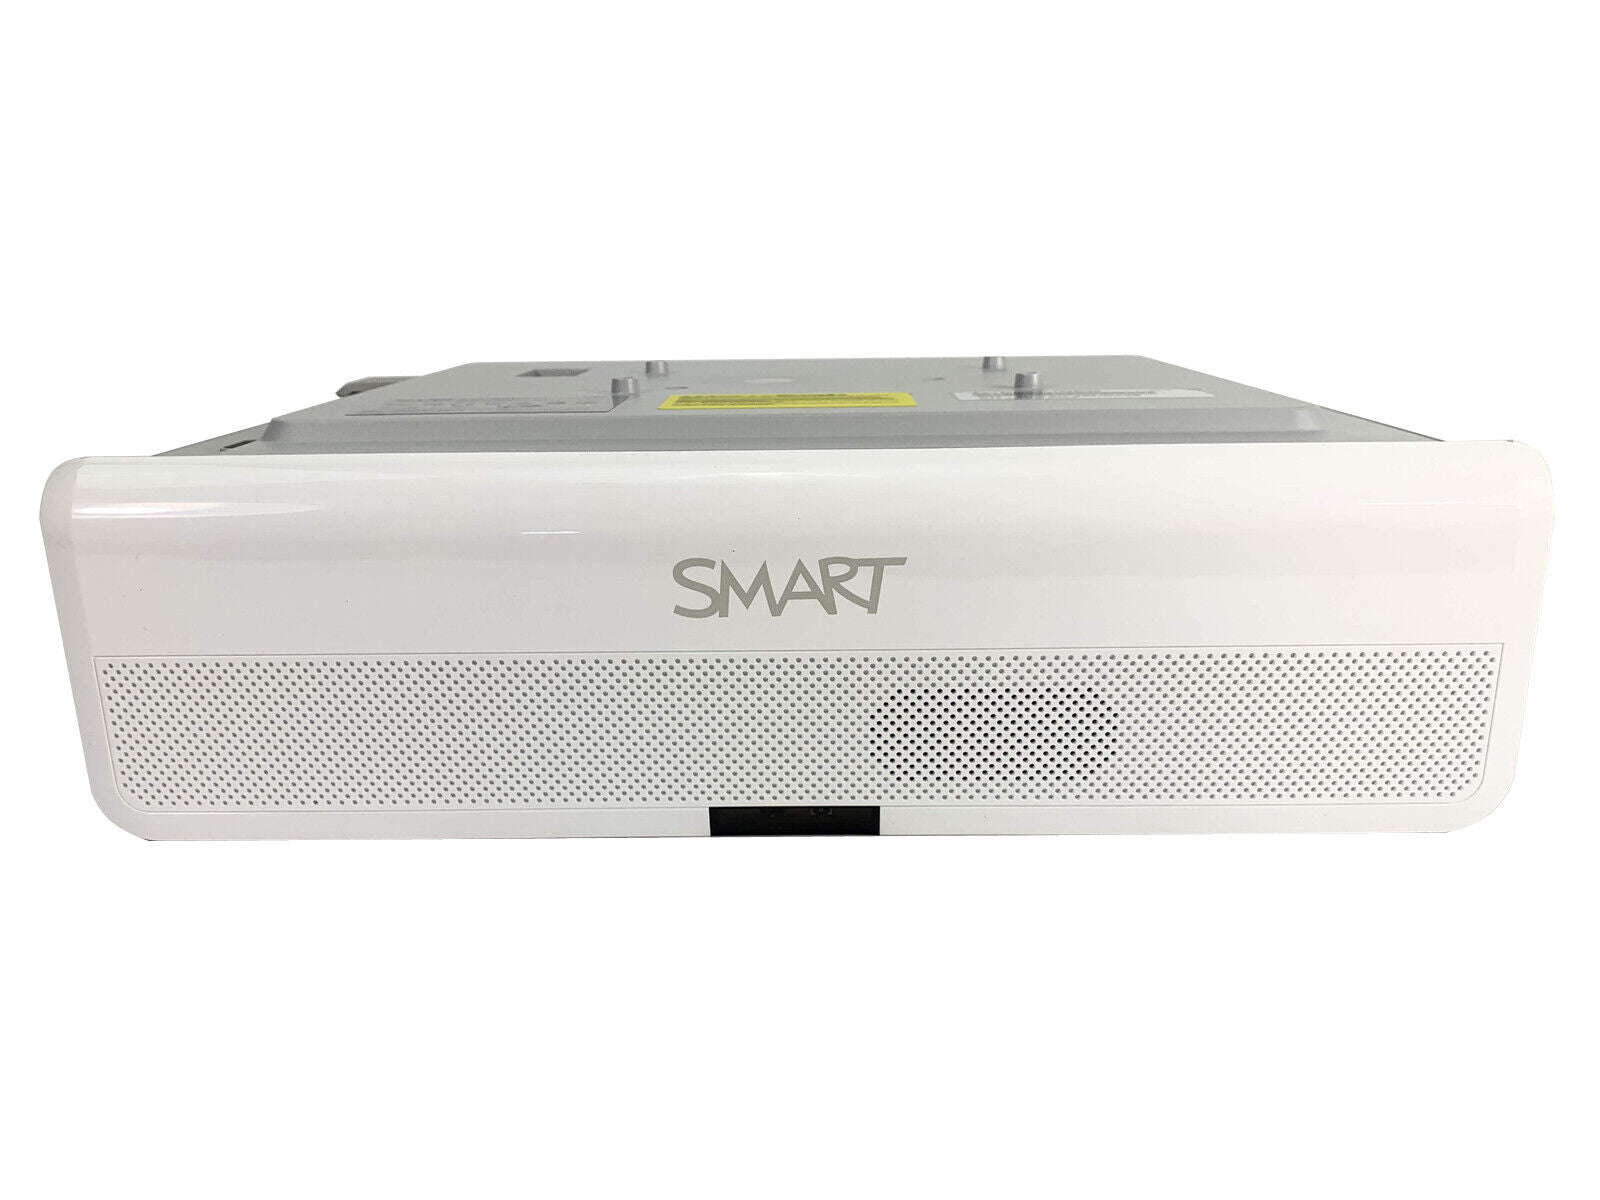 Smart U100 Projector (2 yrs guarantee)